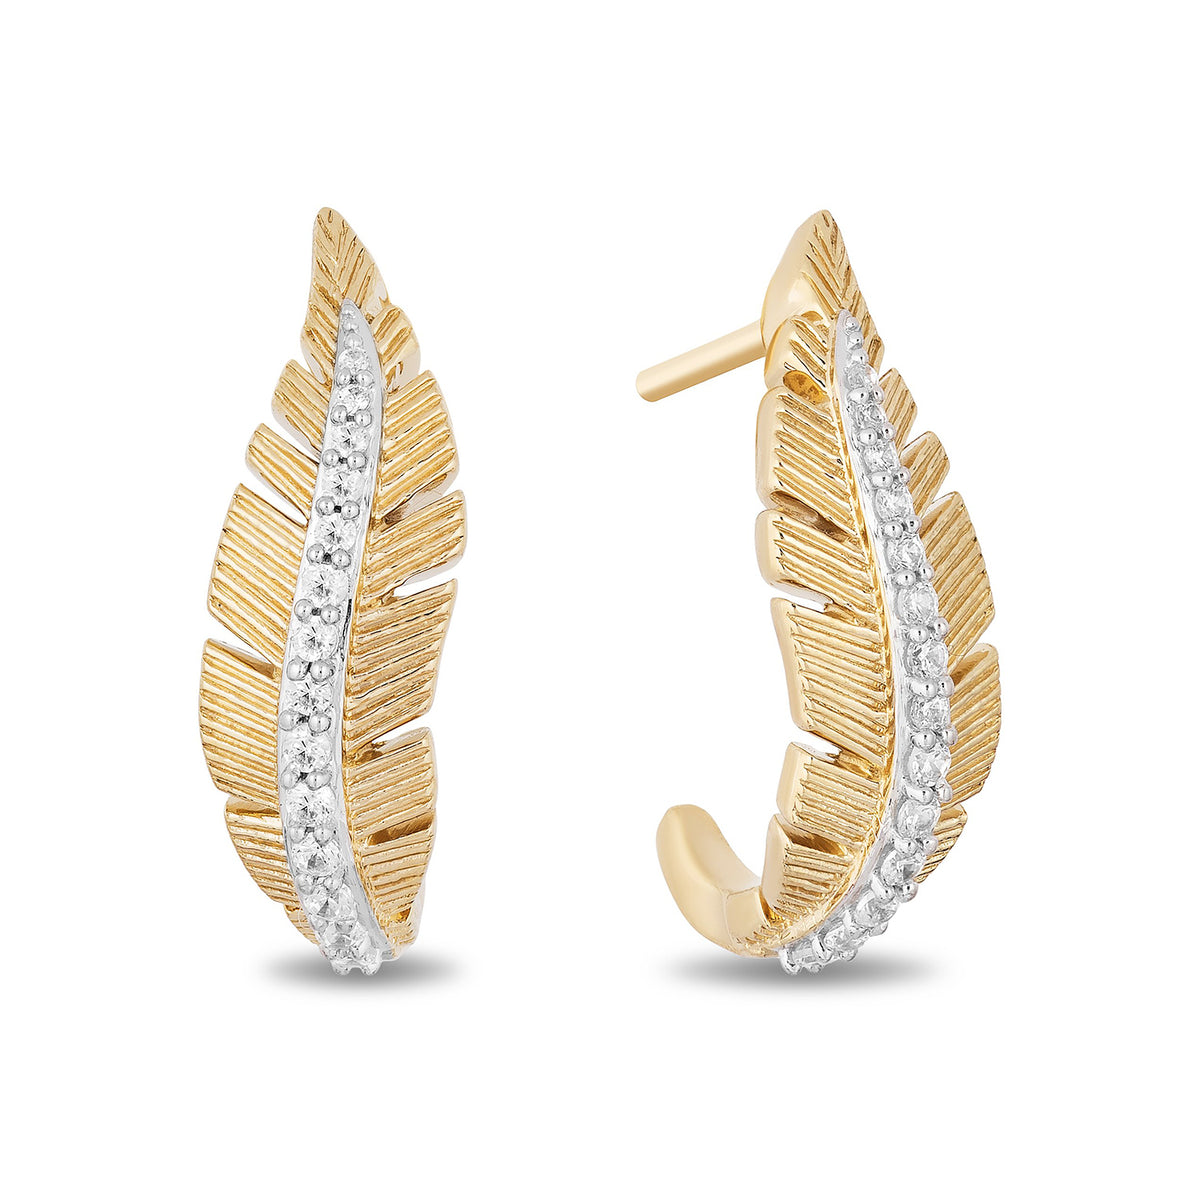  Jewelili Enchanted Disney Fine Jewelry 10K Yellow Gold 1/10  Cttw Diamond Pocahontas Feather Ring, Size 5 : ביגוד, נעליים ותכשיטים